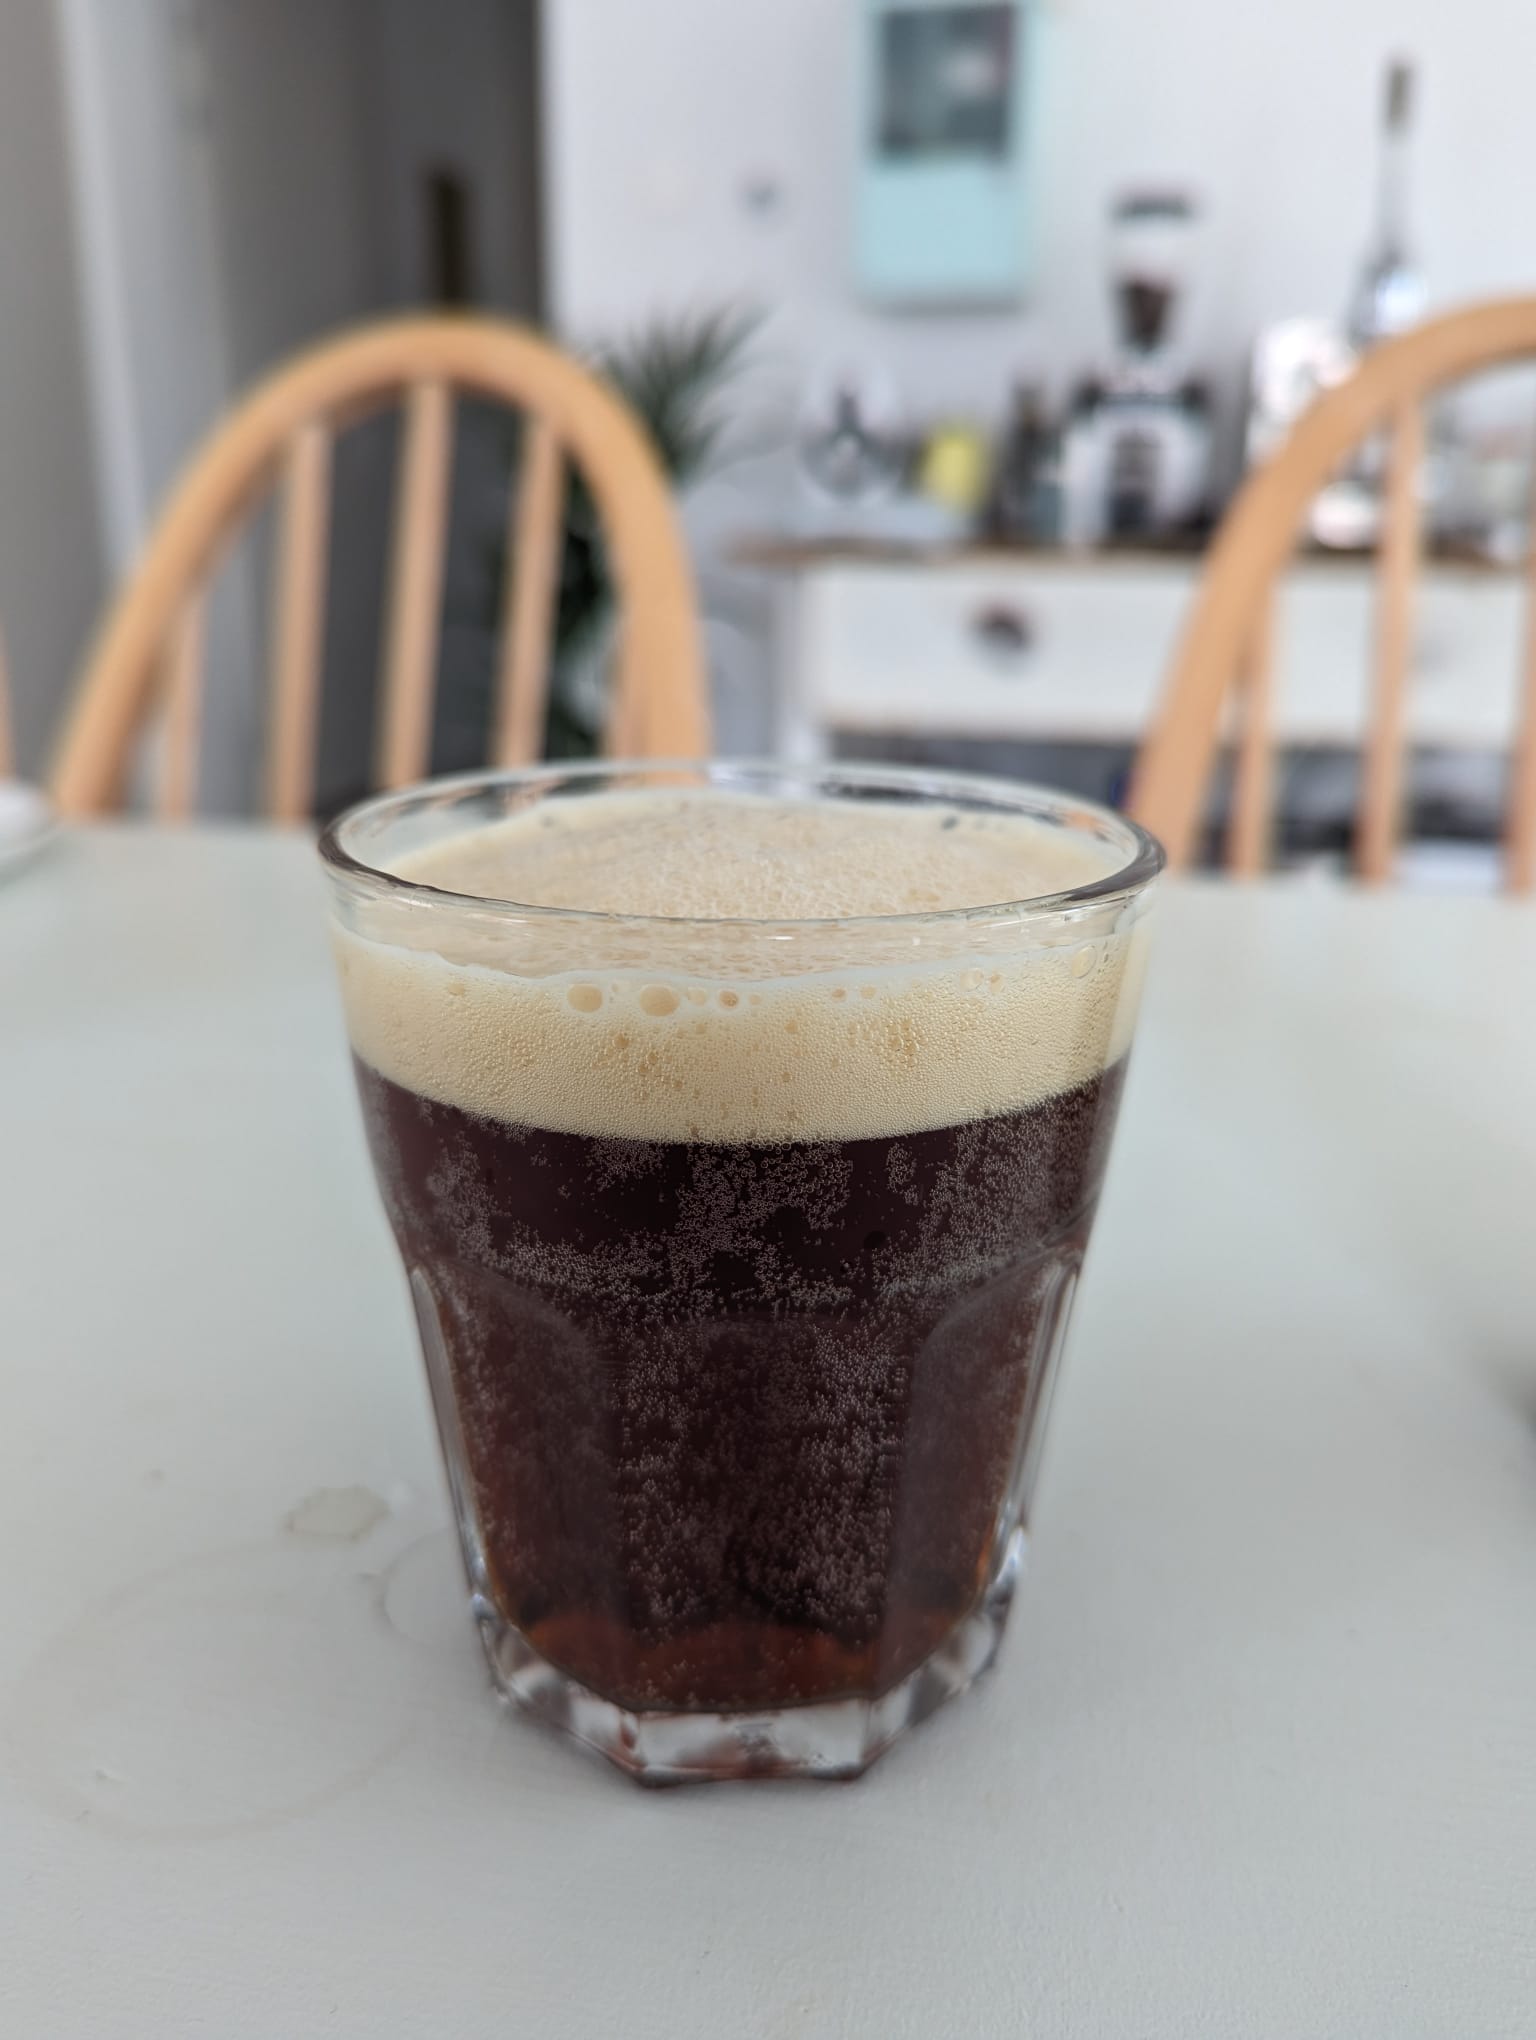 Brewed in a Blink: Health Store’s Barley Malt Beer